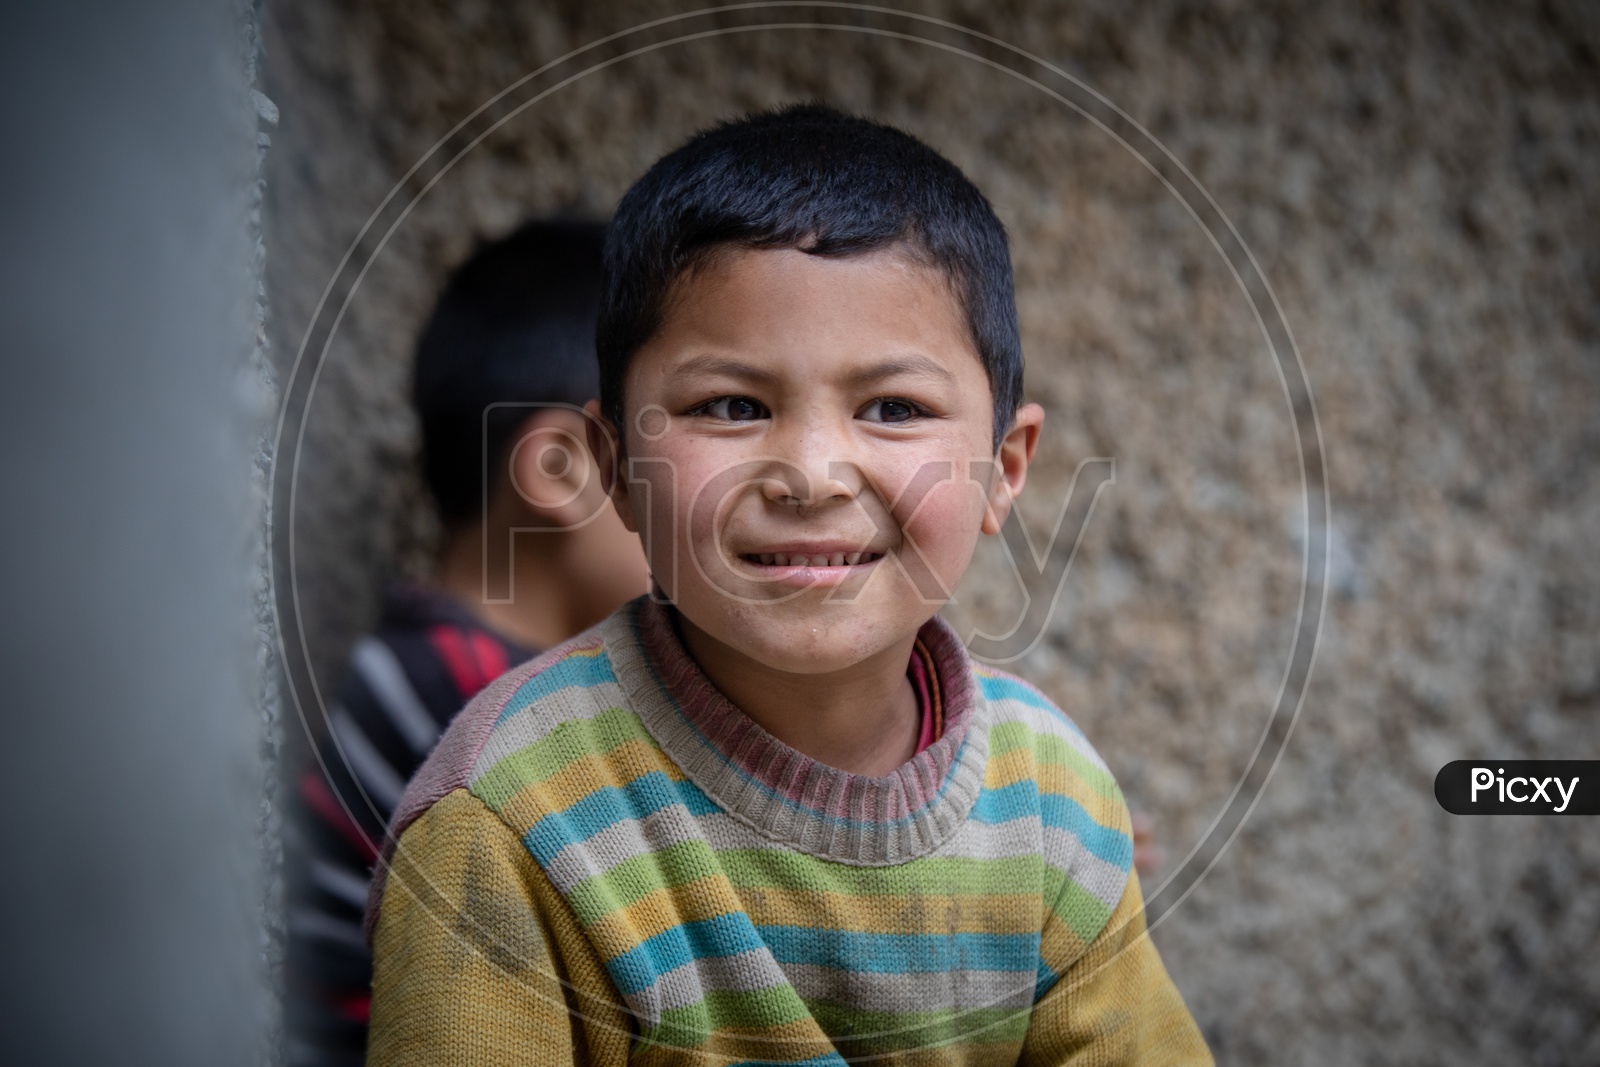 Portratit of Himalayan boy child